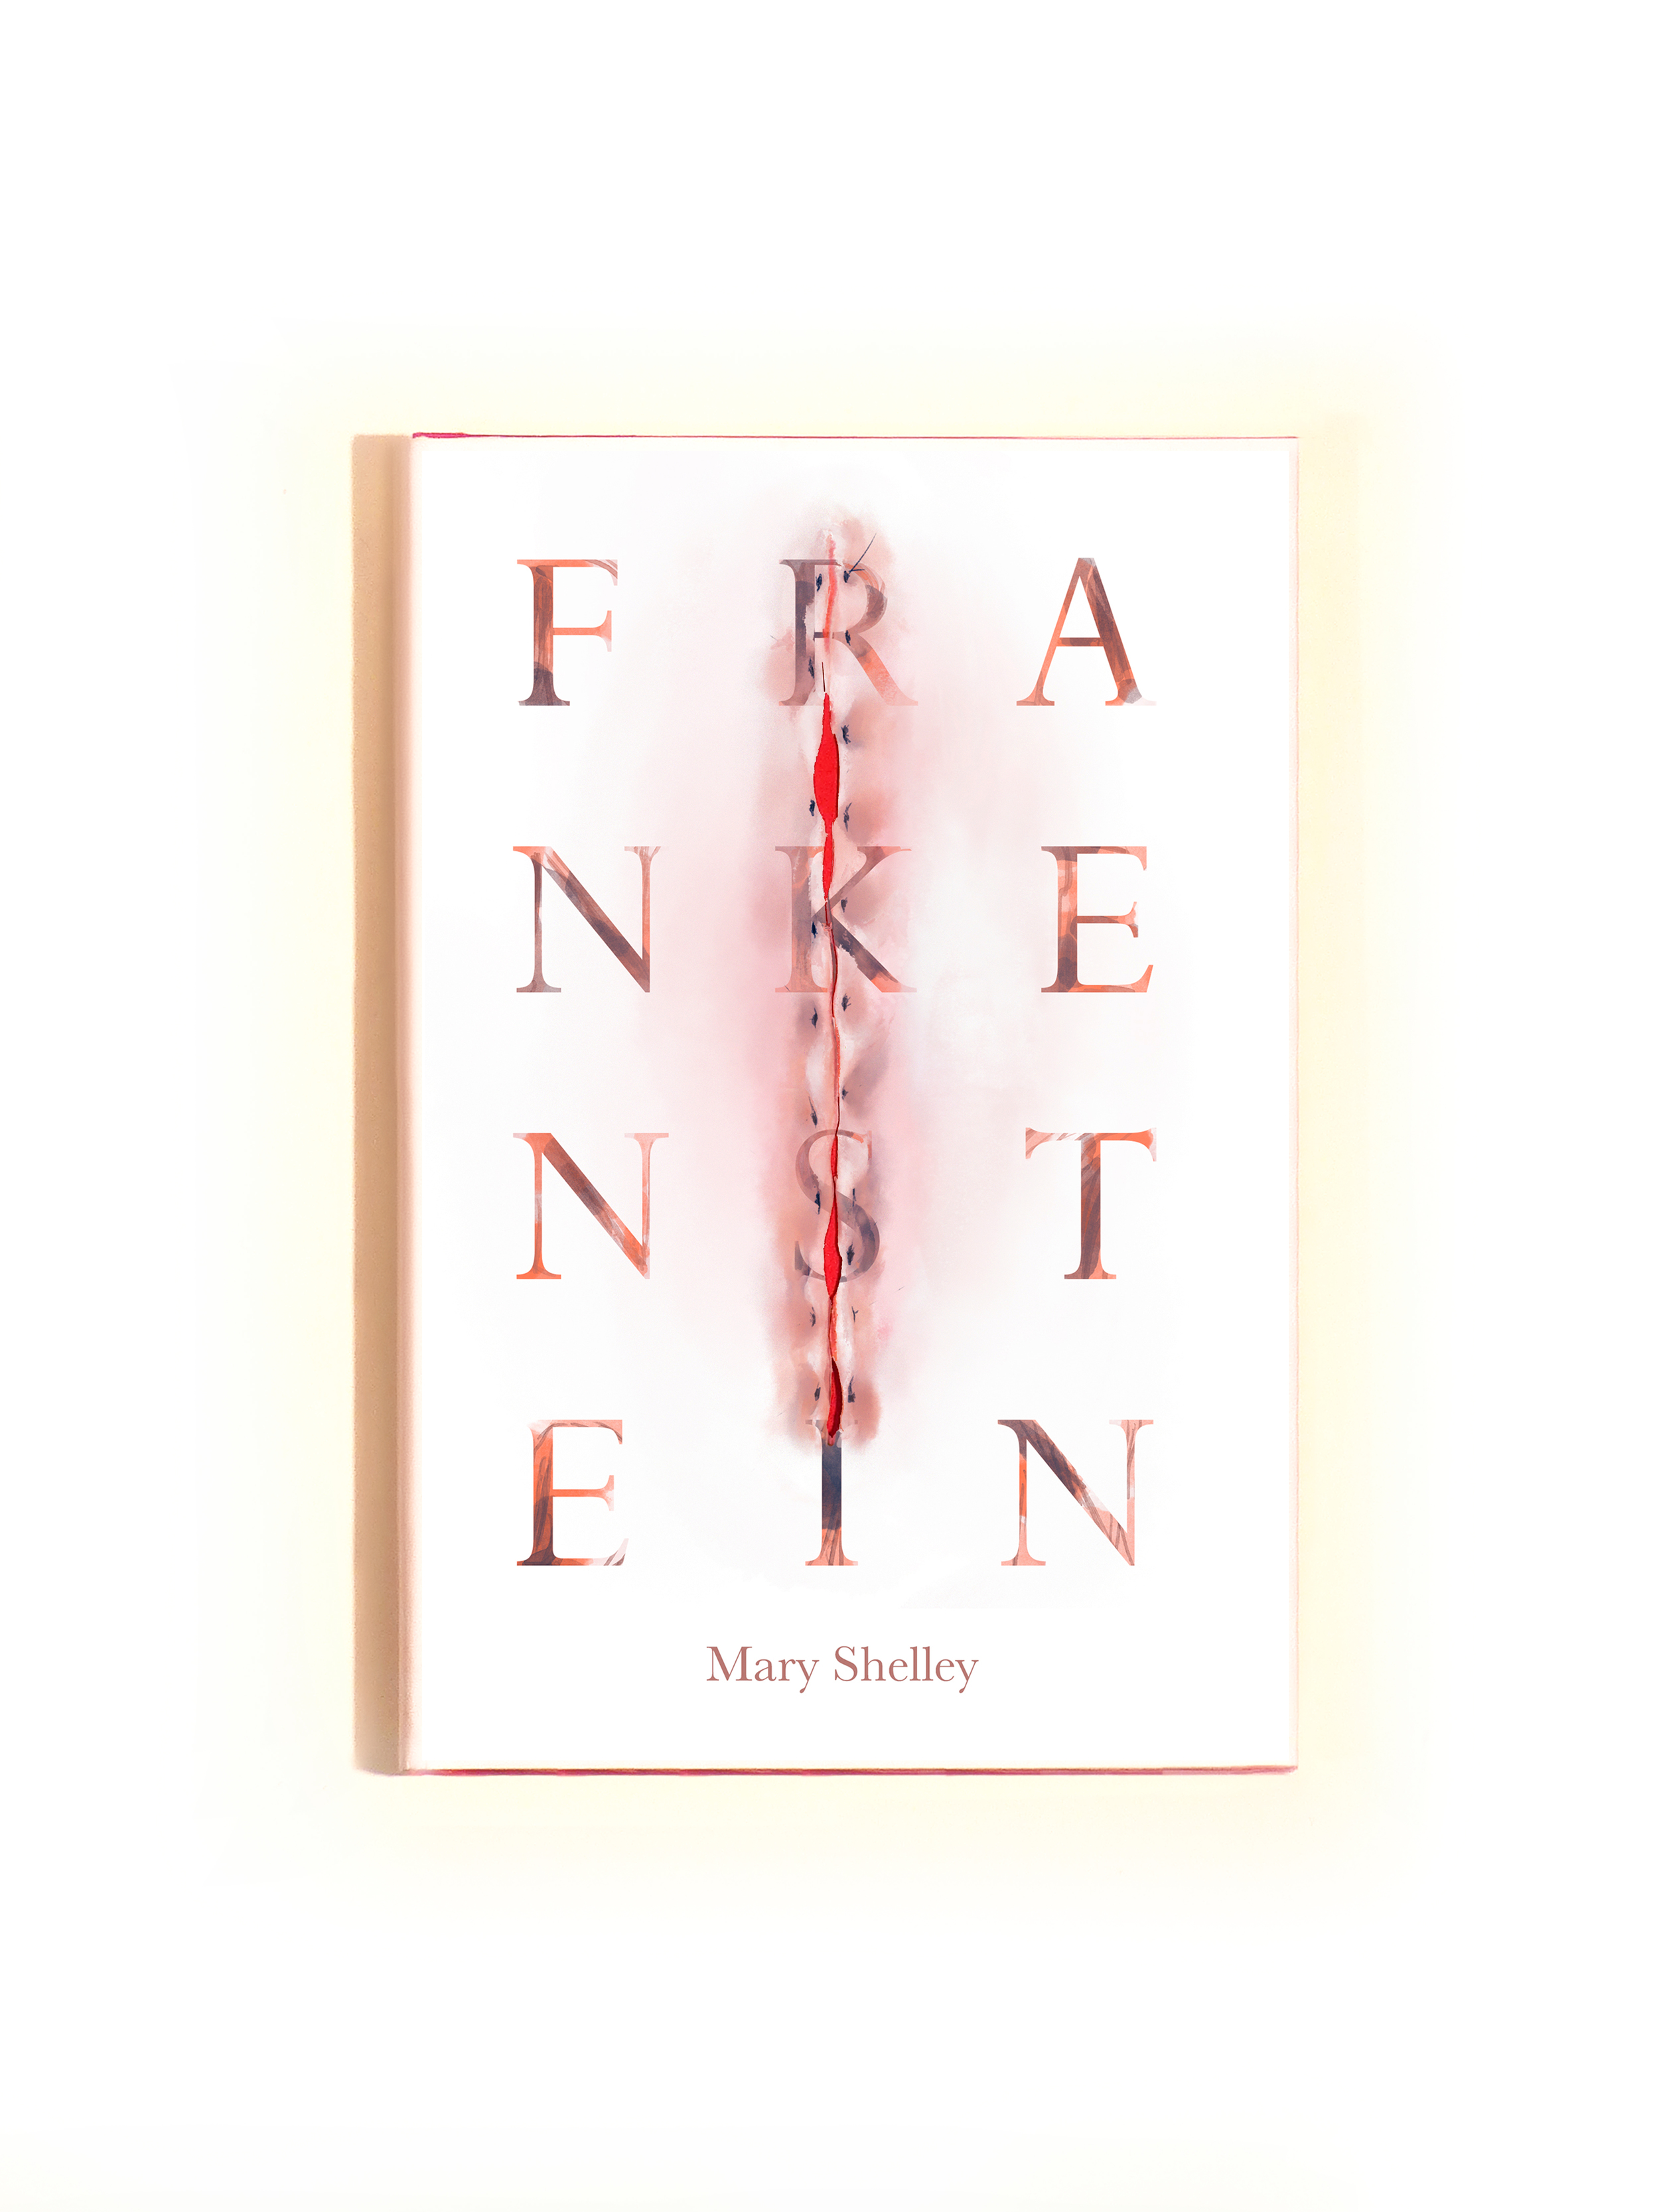 Frankenstein Book Cover Photographed.jpg